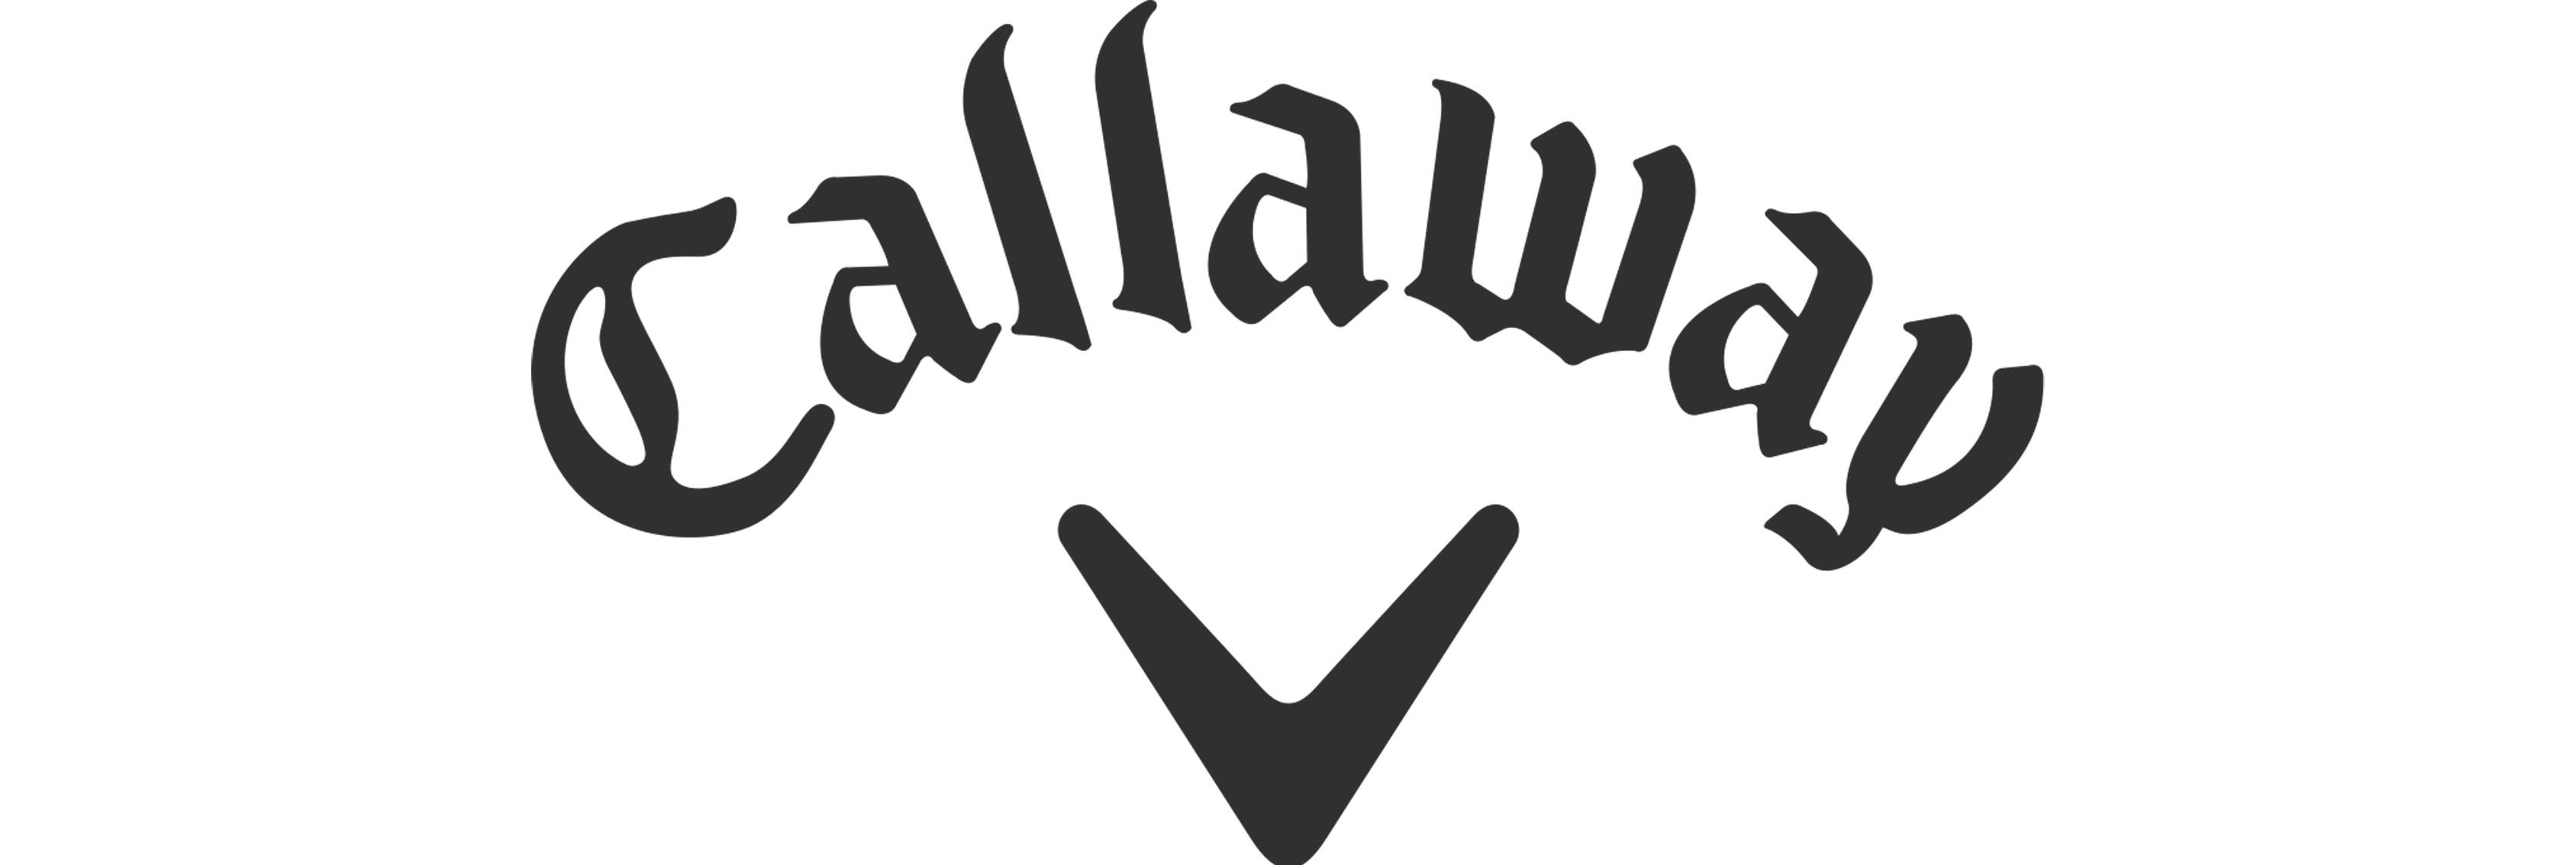 CALLAWAY